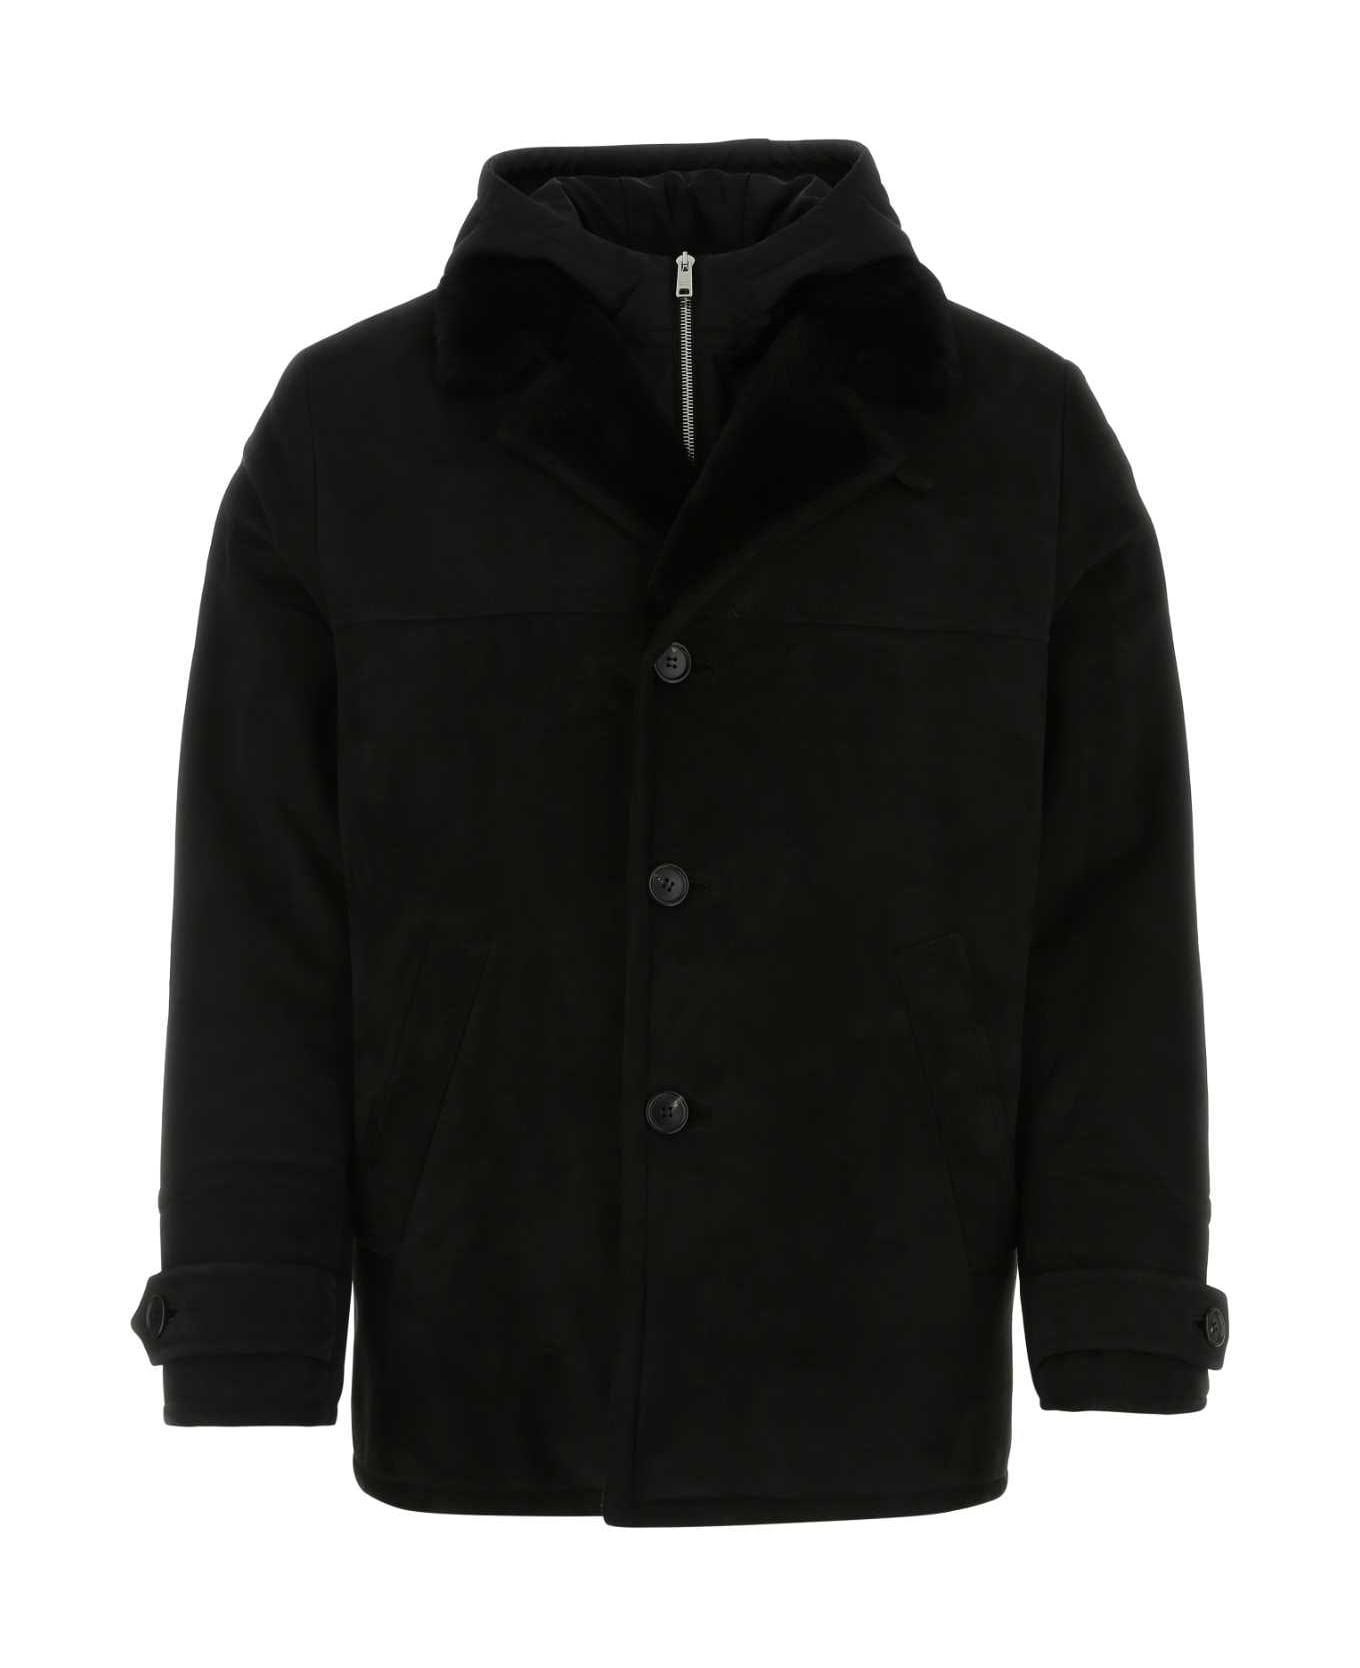 Prada Black Shearling Jacket - NERO